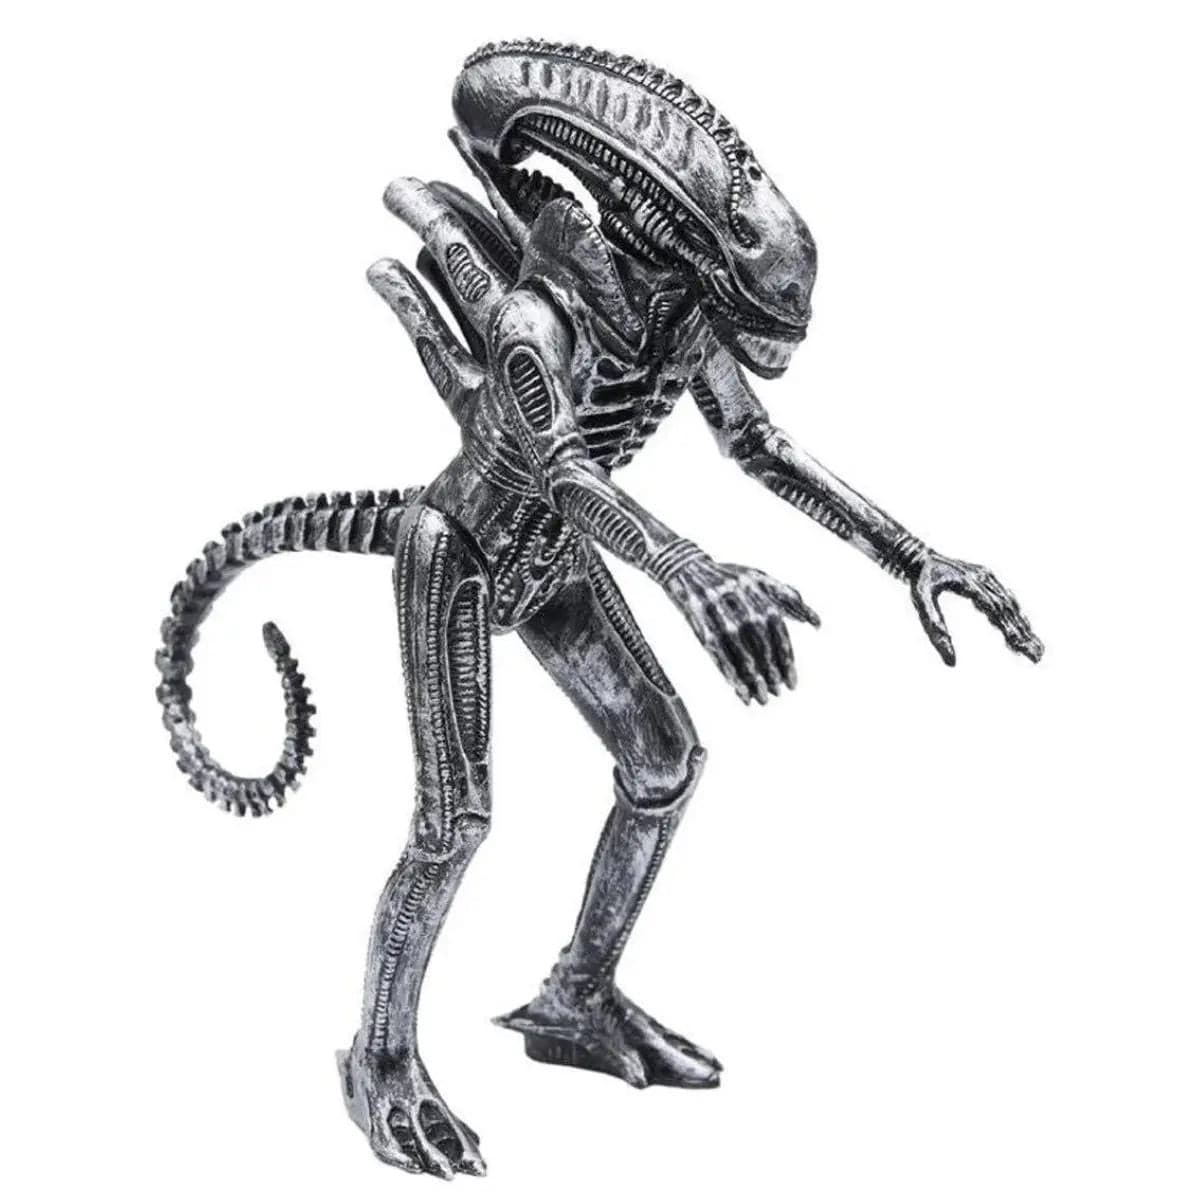 Super7 Aliens Alien Warrior 3 3/4-Inch ReAction Figure - Simon's Collectibles